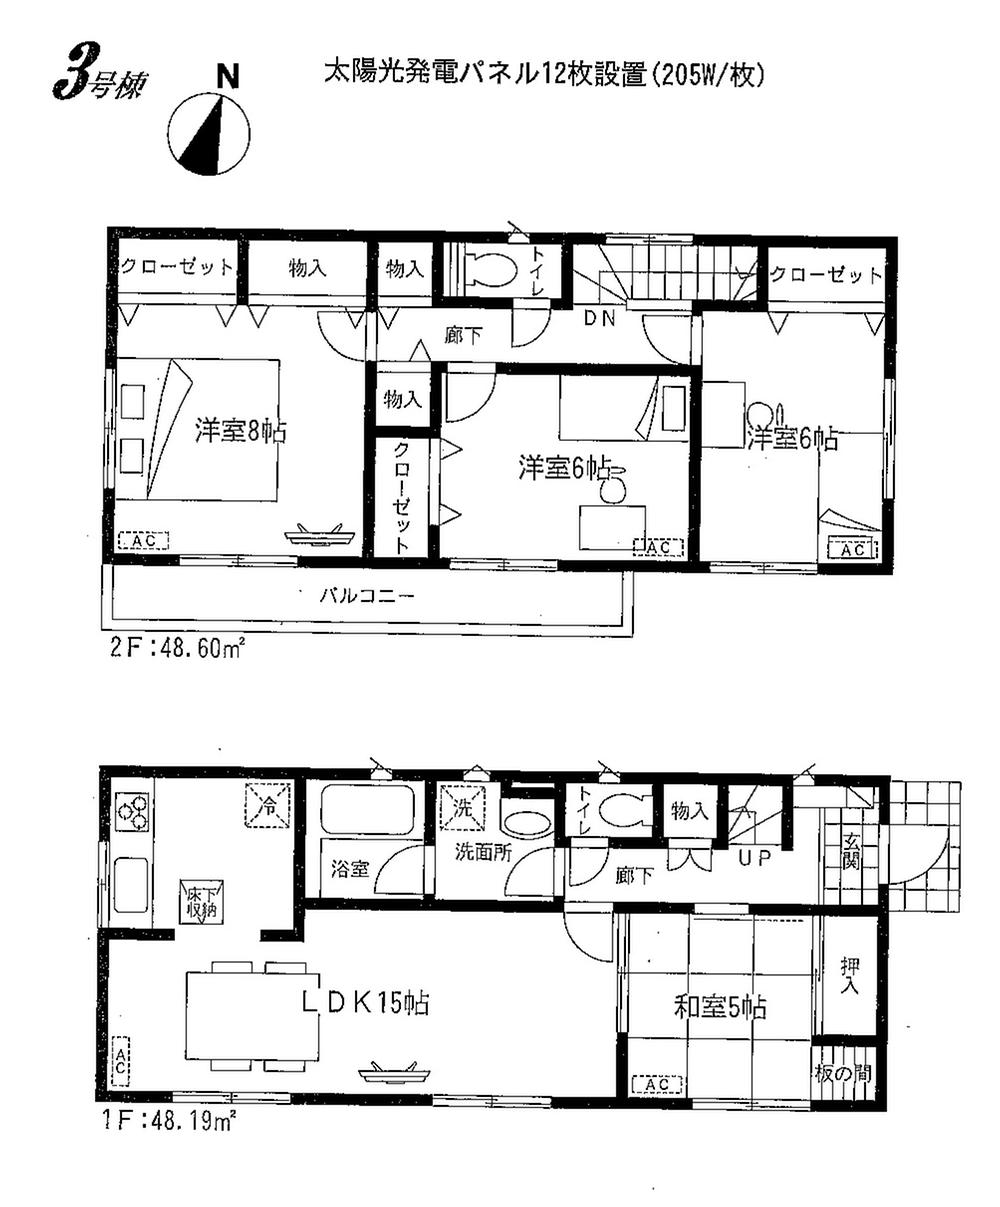 Floor plan. (3 Building), Price 28.8 million yen, 4LDK, Land area 127.2 sq m , Building area 96.79 sq m